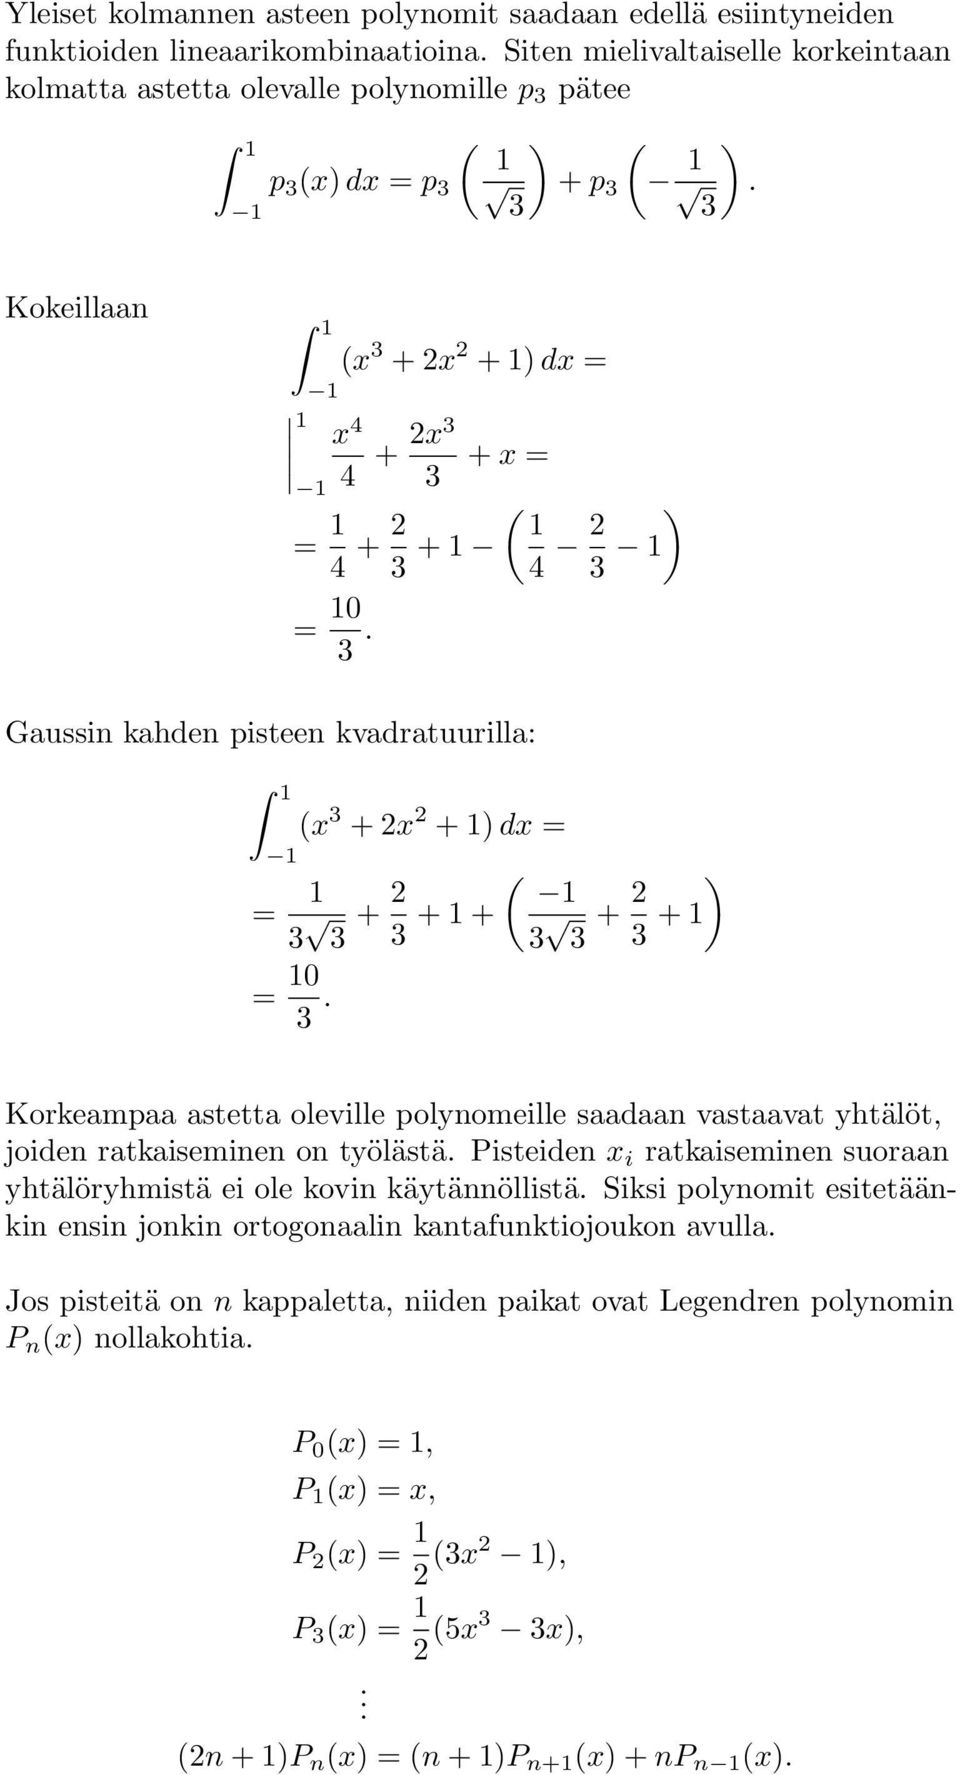 3 Kokeillaan 1 (x 3 + x + 1)dx = 1 1 x 4 1 4 + x3 3 + x = = 1 4 + ( 1 3 + 1 4 ) 3 1 = 10 3. Gaussin kahden pisteen kvadratuurilla: 1 1 (x 3 + x + 1)dx = = 1 3 3 + 3 + 1 + = 10 3.